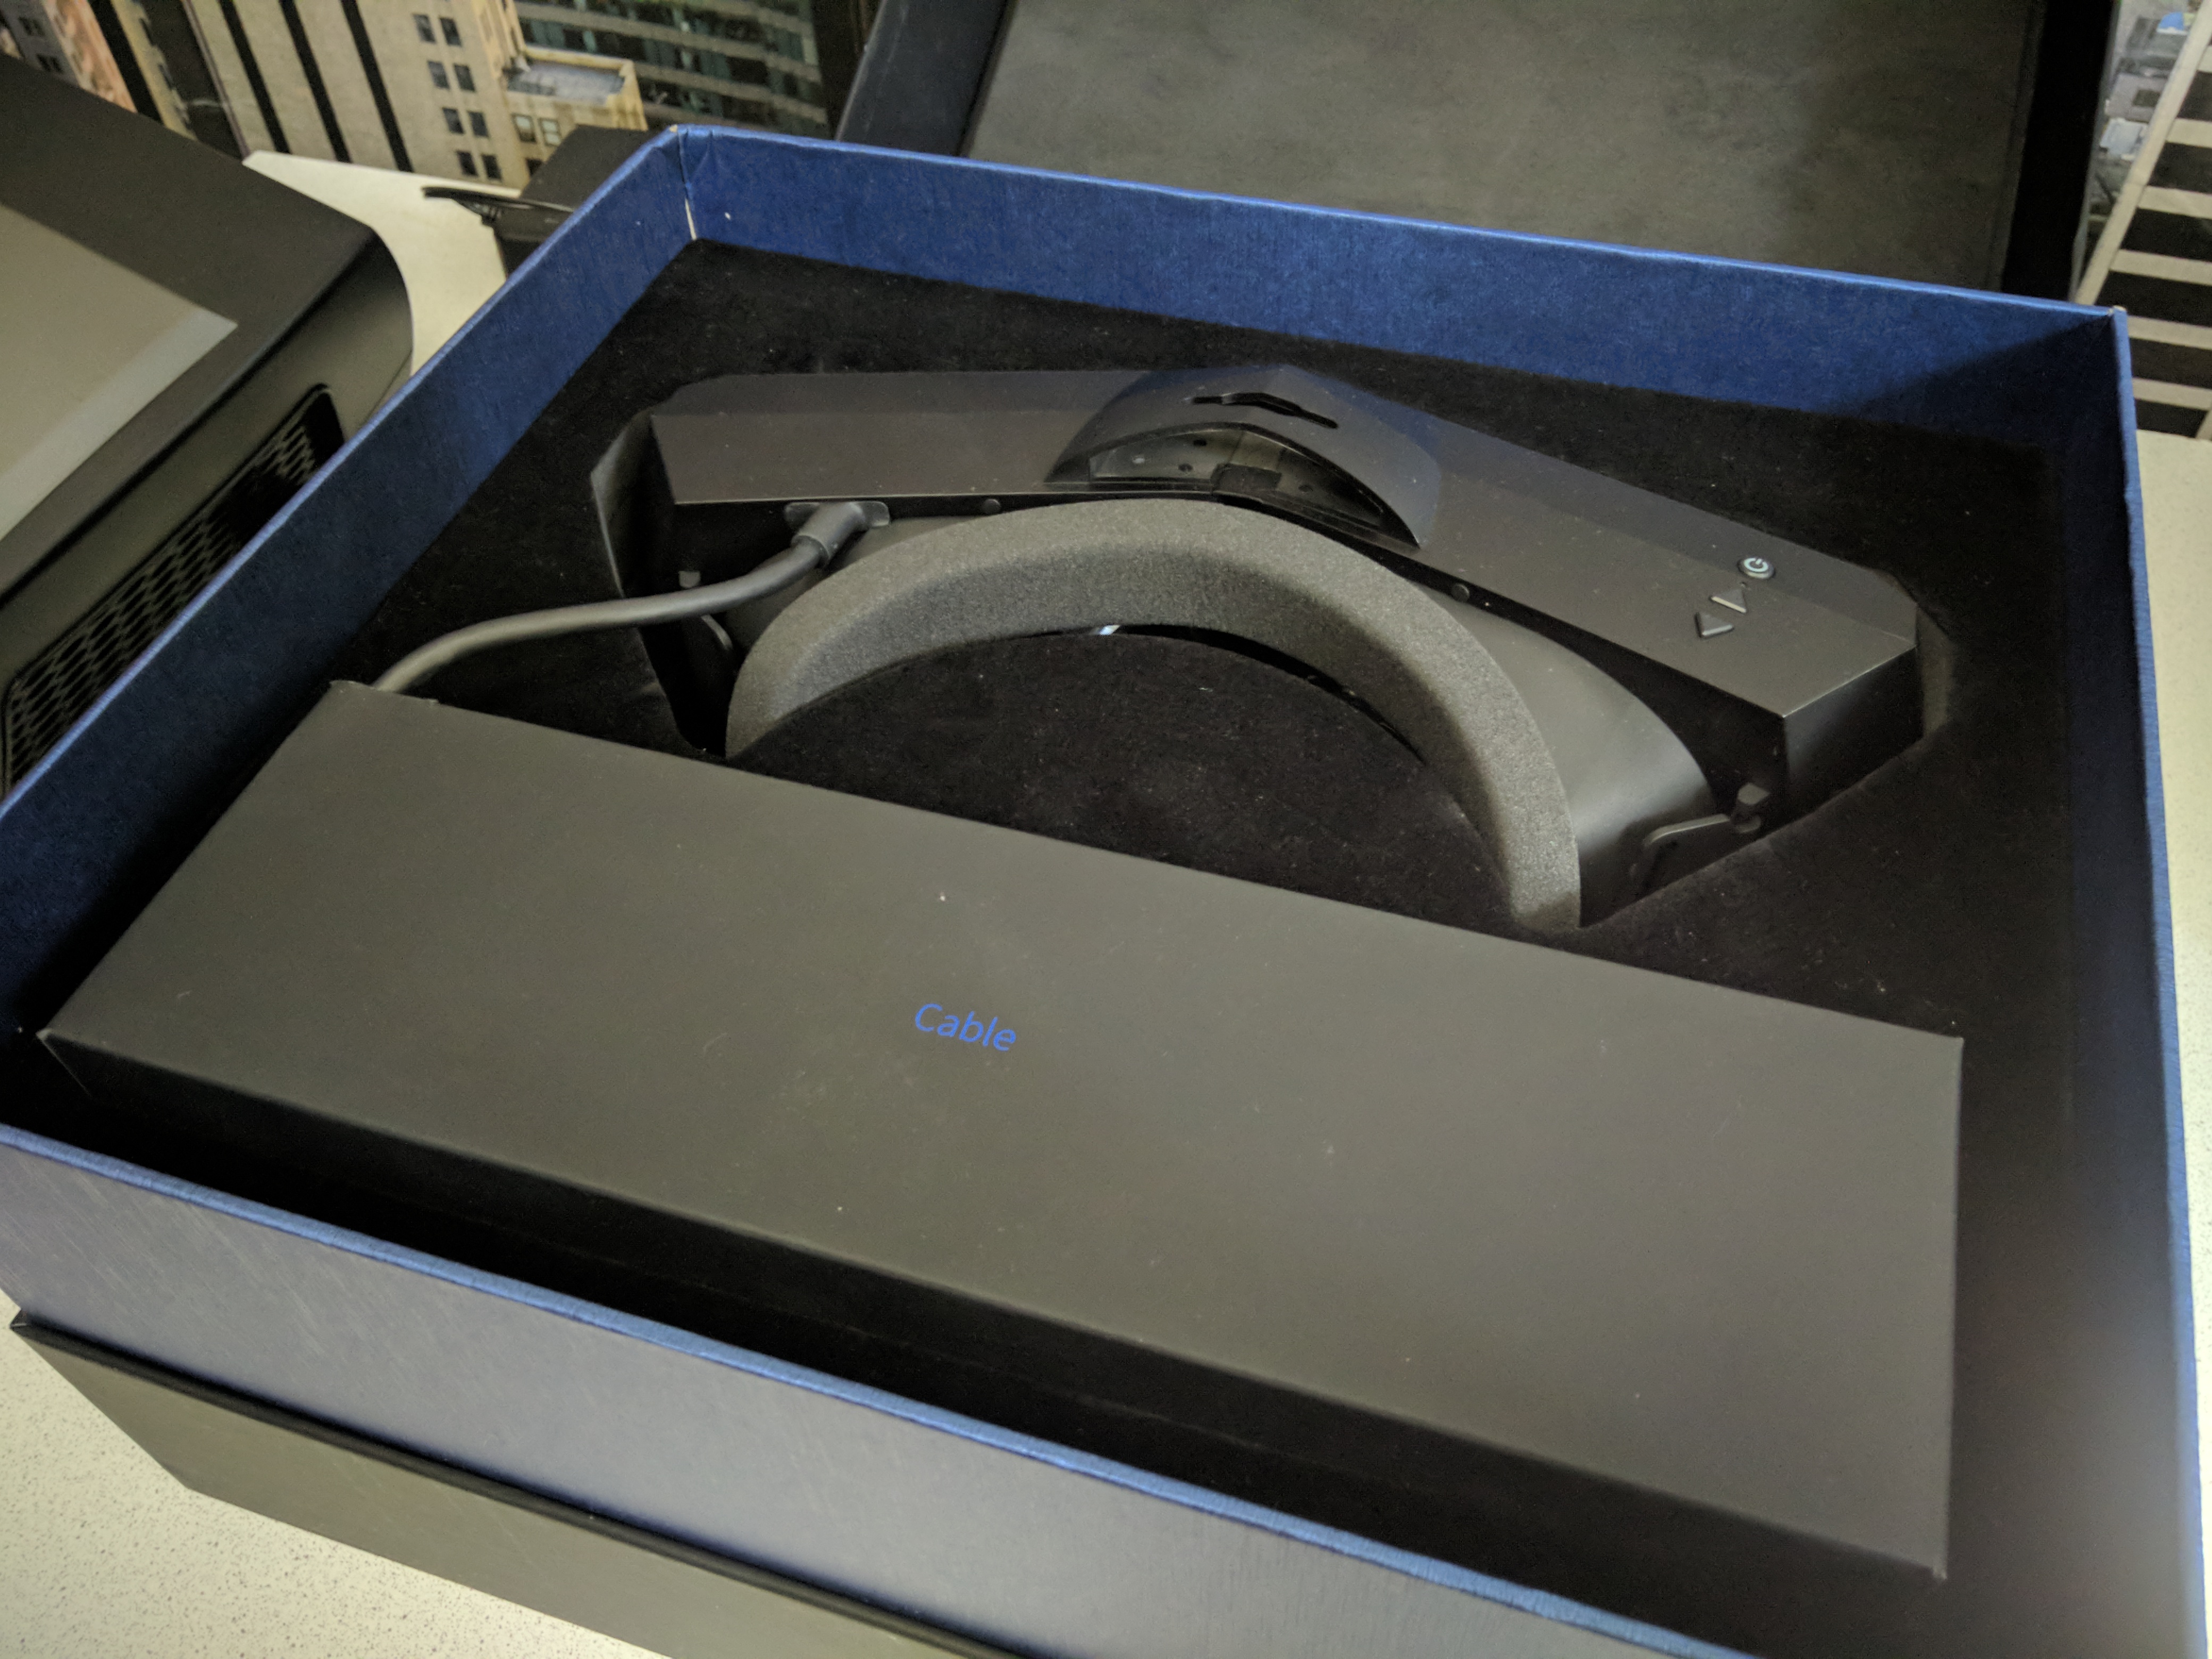 Skyrim VR: 8KX vs Crystal comparison (through-the-lens photography) : r/ Pimax